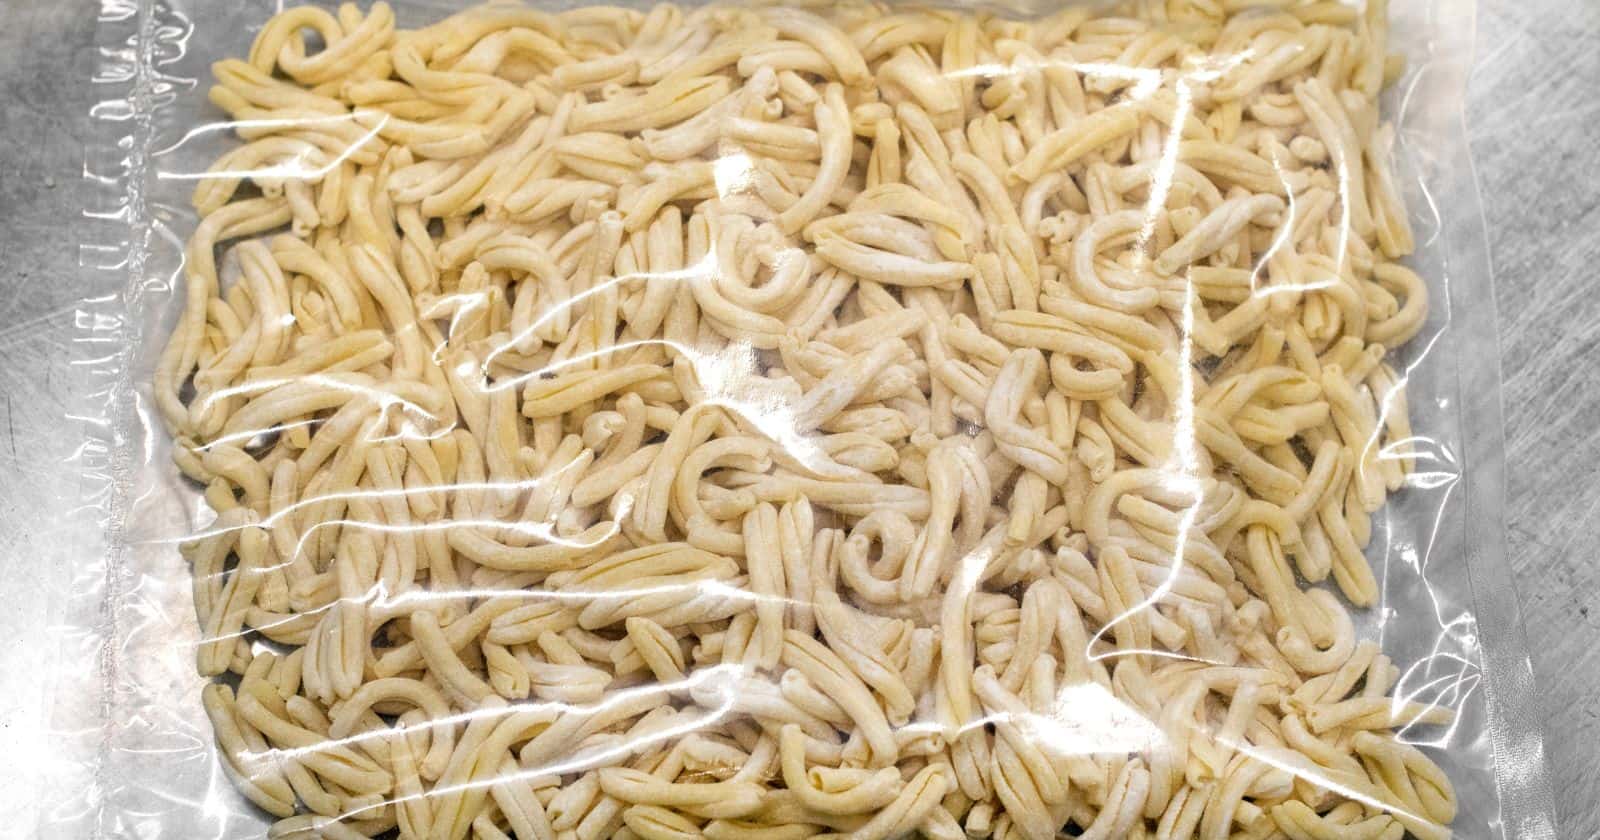 How To Store Ramen Noodles Long Term